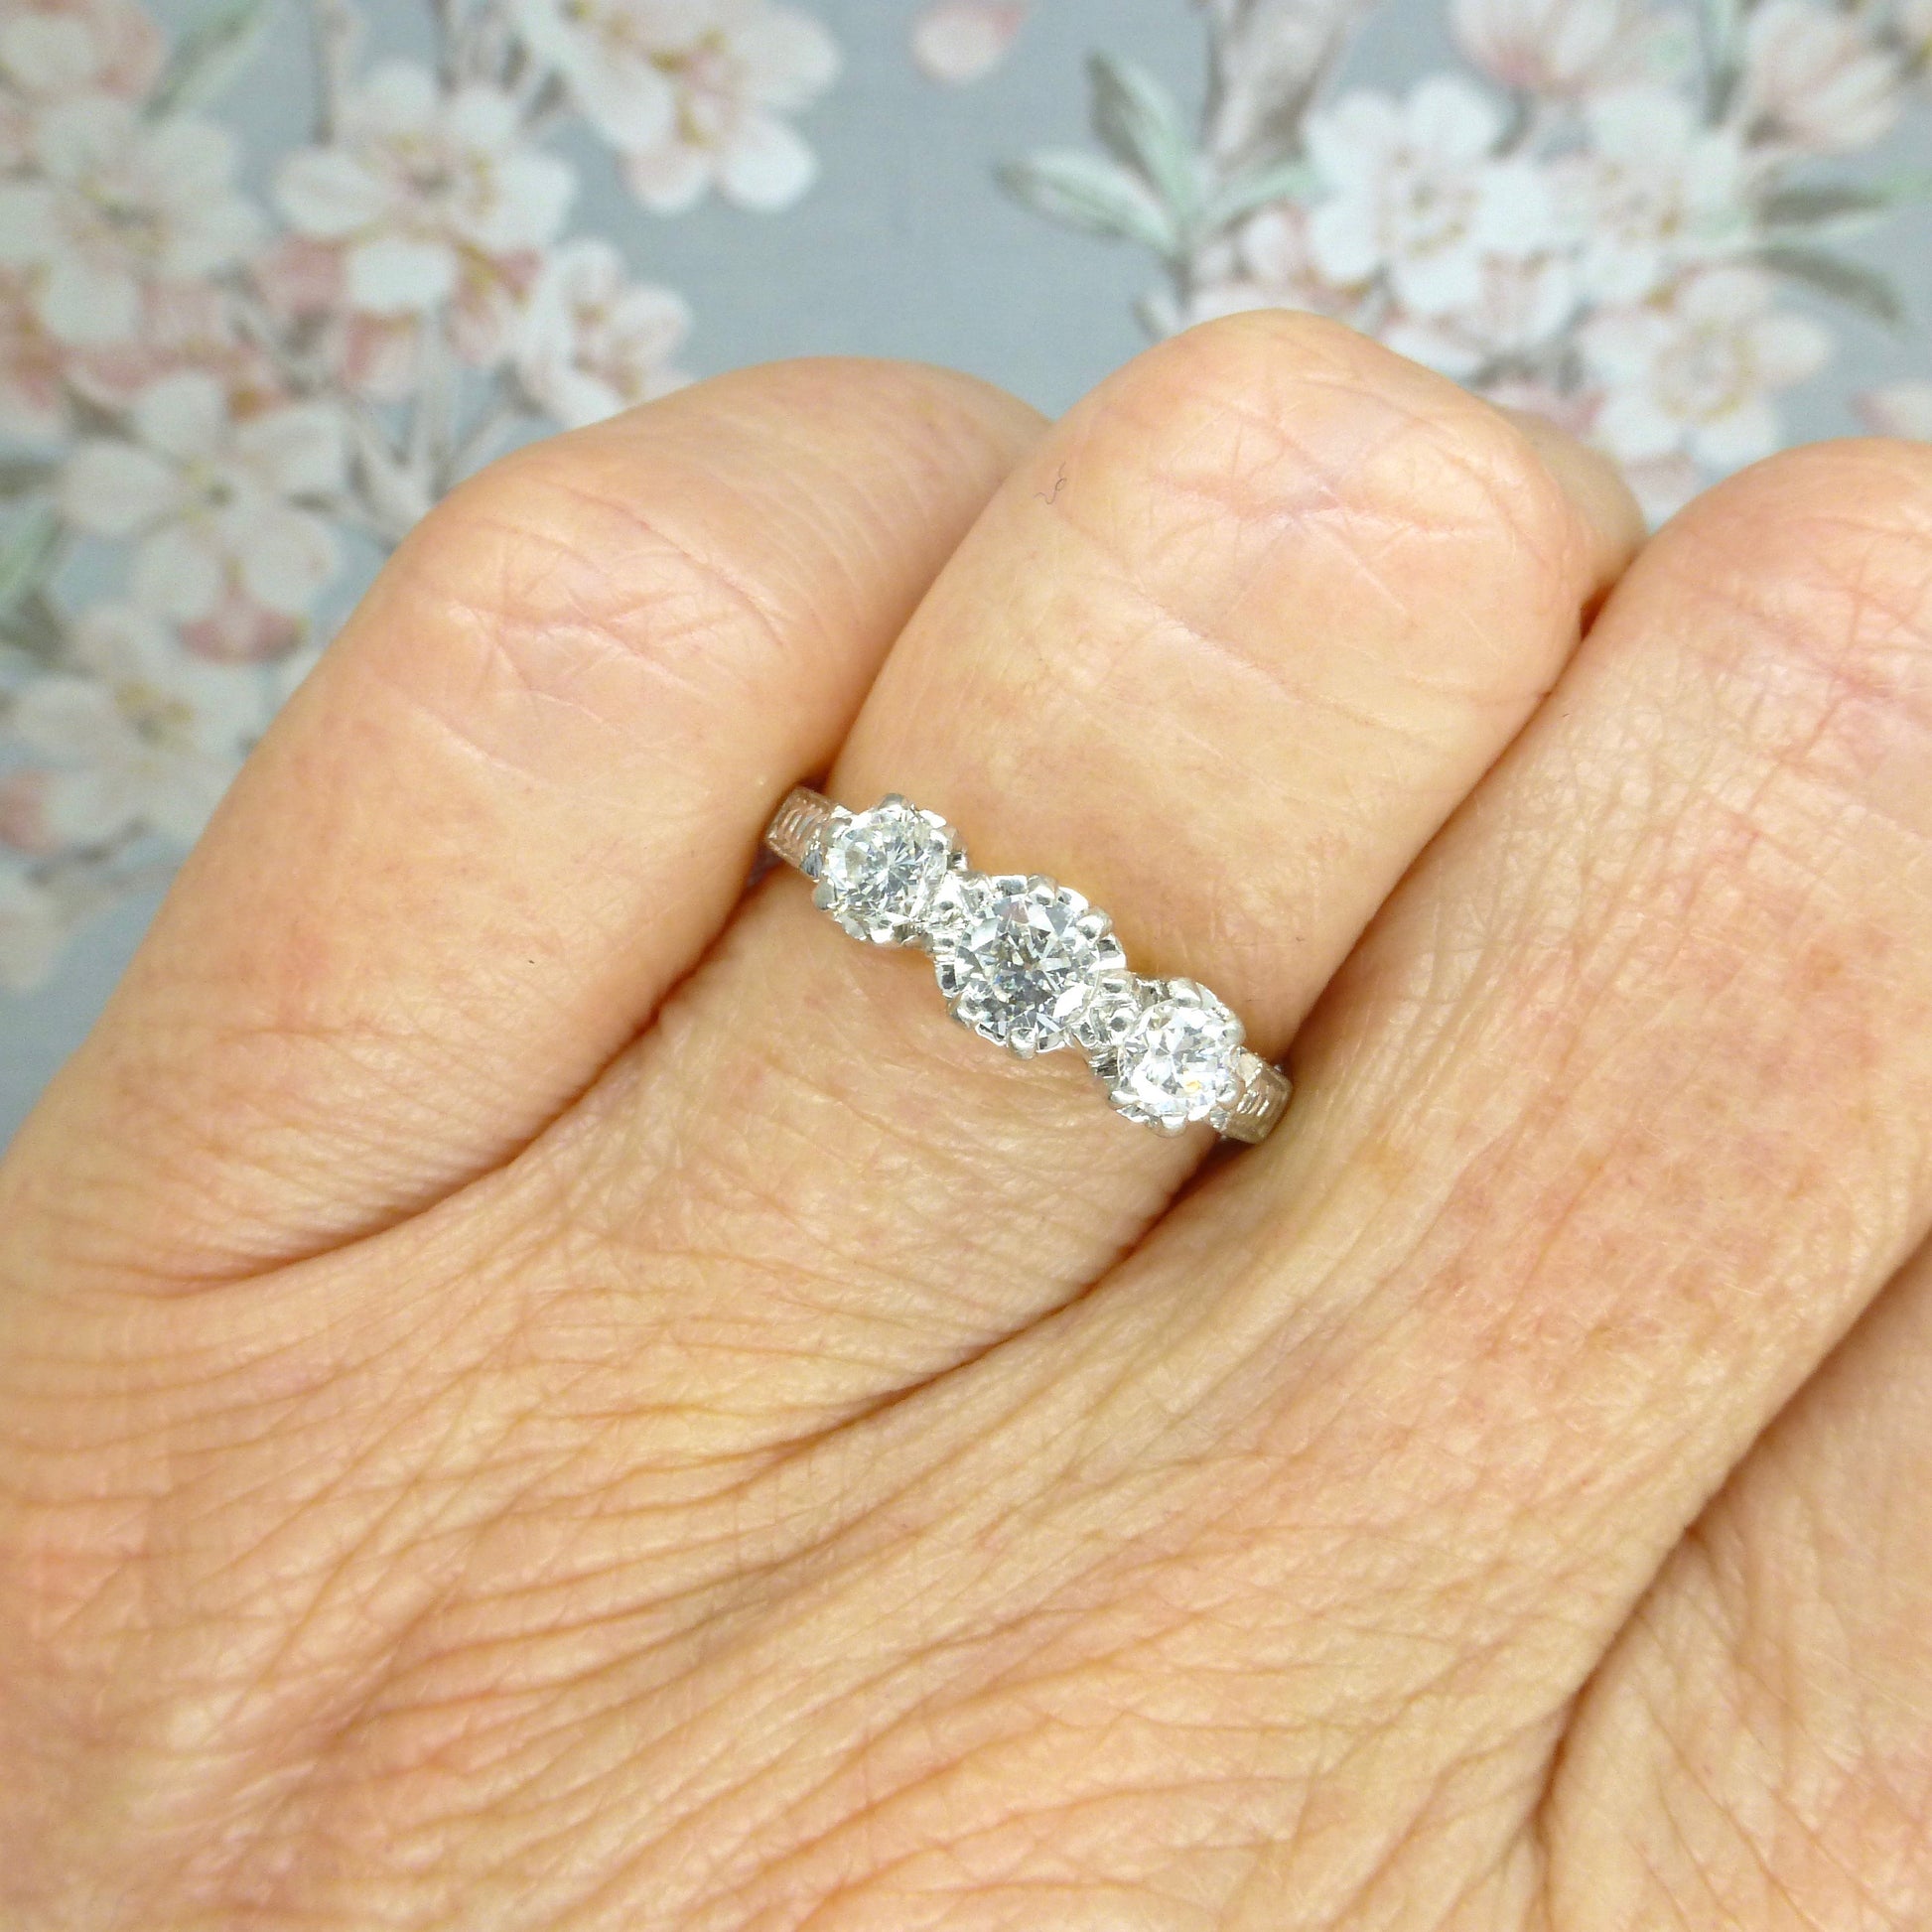 Vintage Bravingtons 18ct Platinum diamond three stone trilogy engagement ring 0.55ct